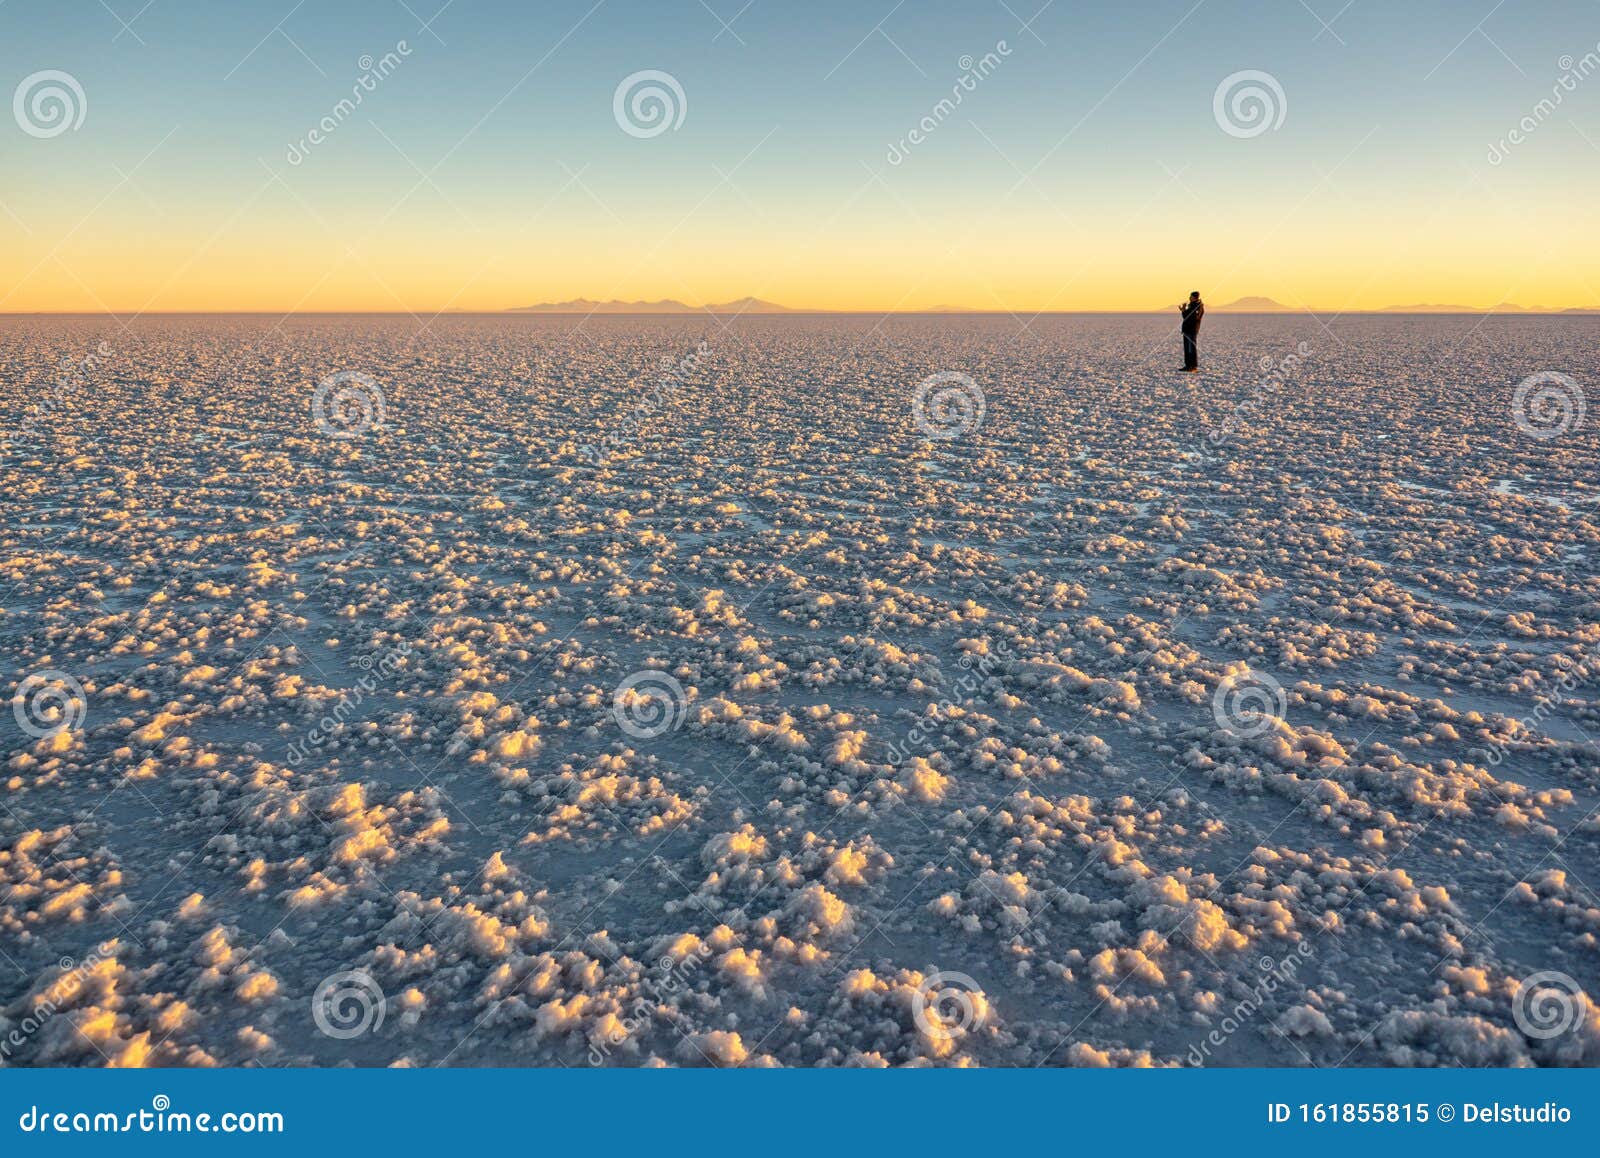 silhouete of a man in salar de uyuni uyuni salt flats at sunset, potosi, bolivia south america